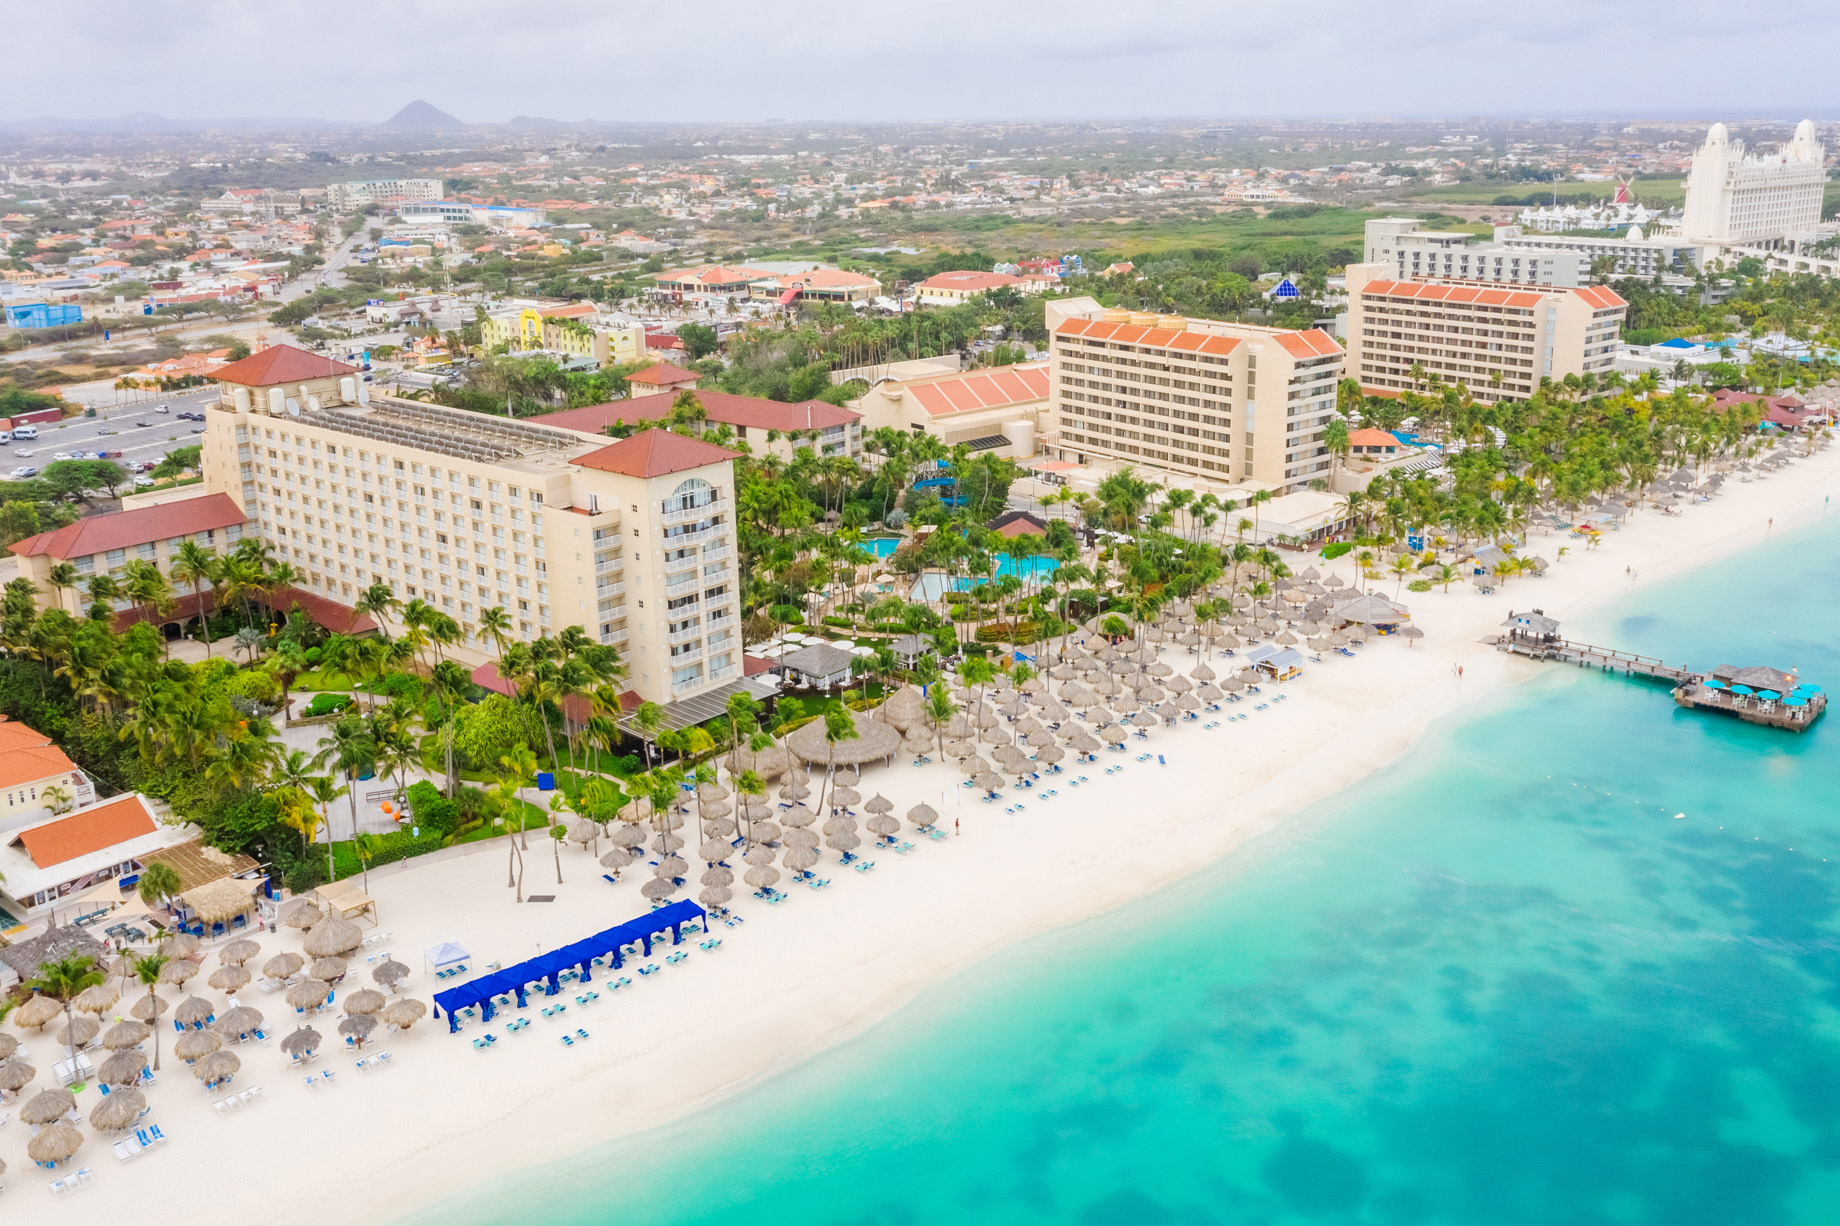 Hyatt Regency Aruba Resort & Casino - Noord, Aruba - Hotel Beach Aerial View